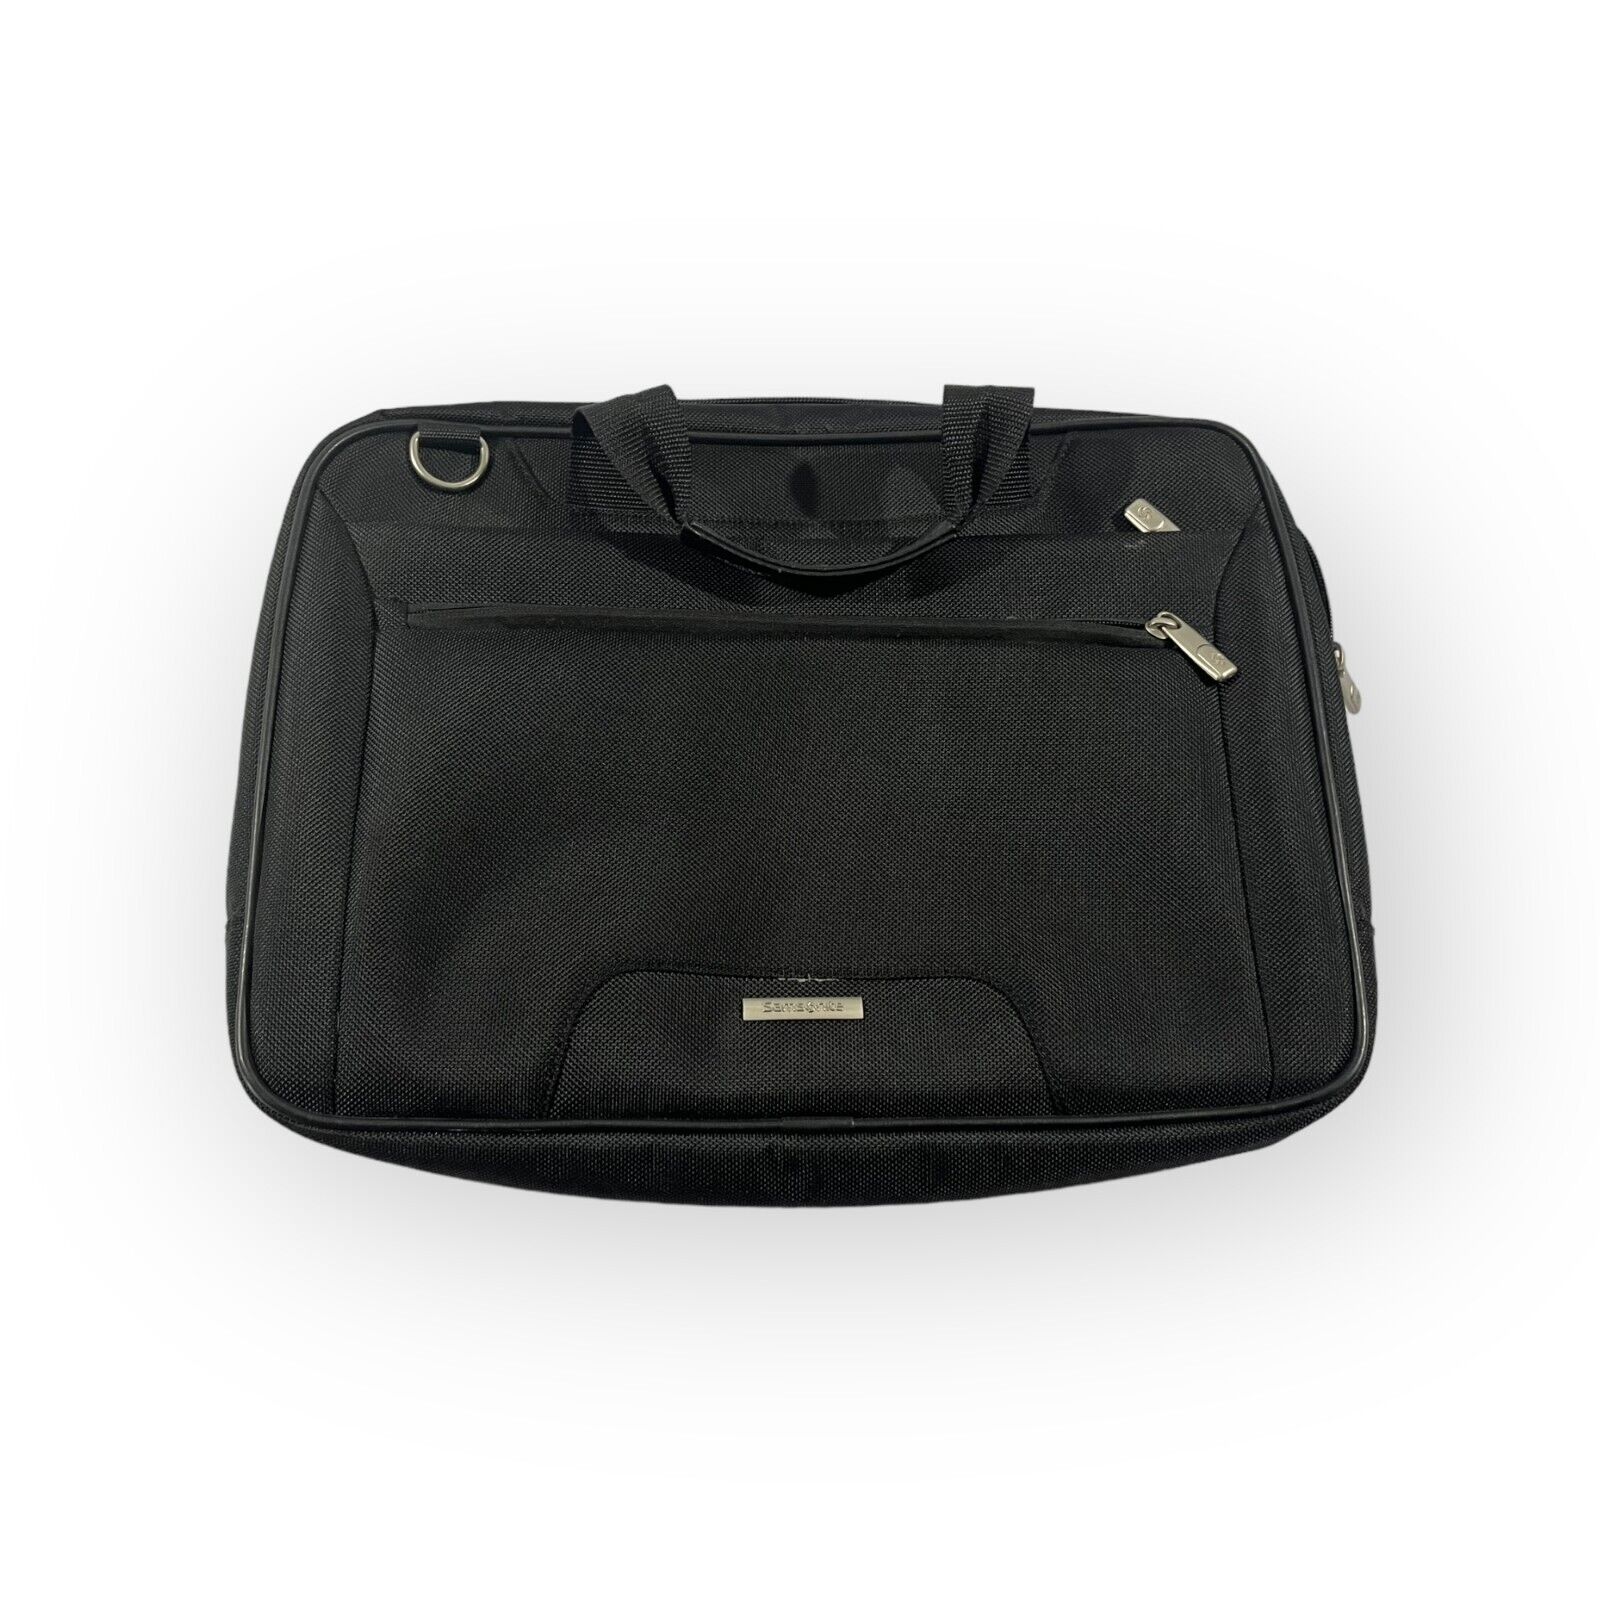 Samsonite Laptop Travel Carry On Carrier Bag 15.6 Inches Black